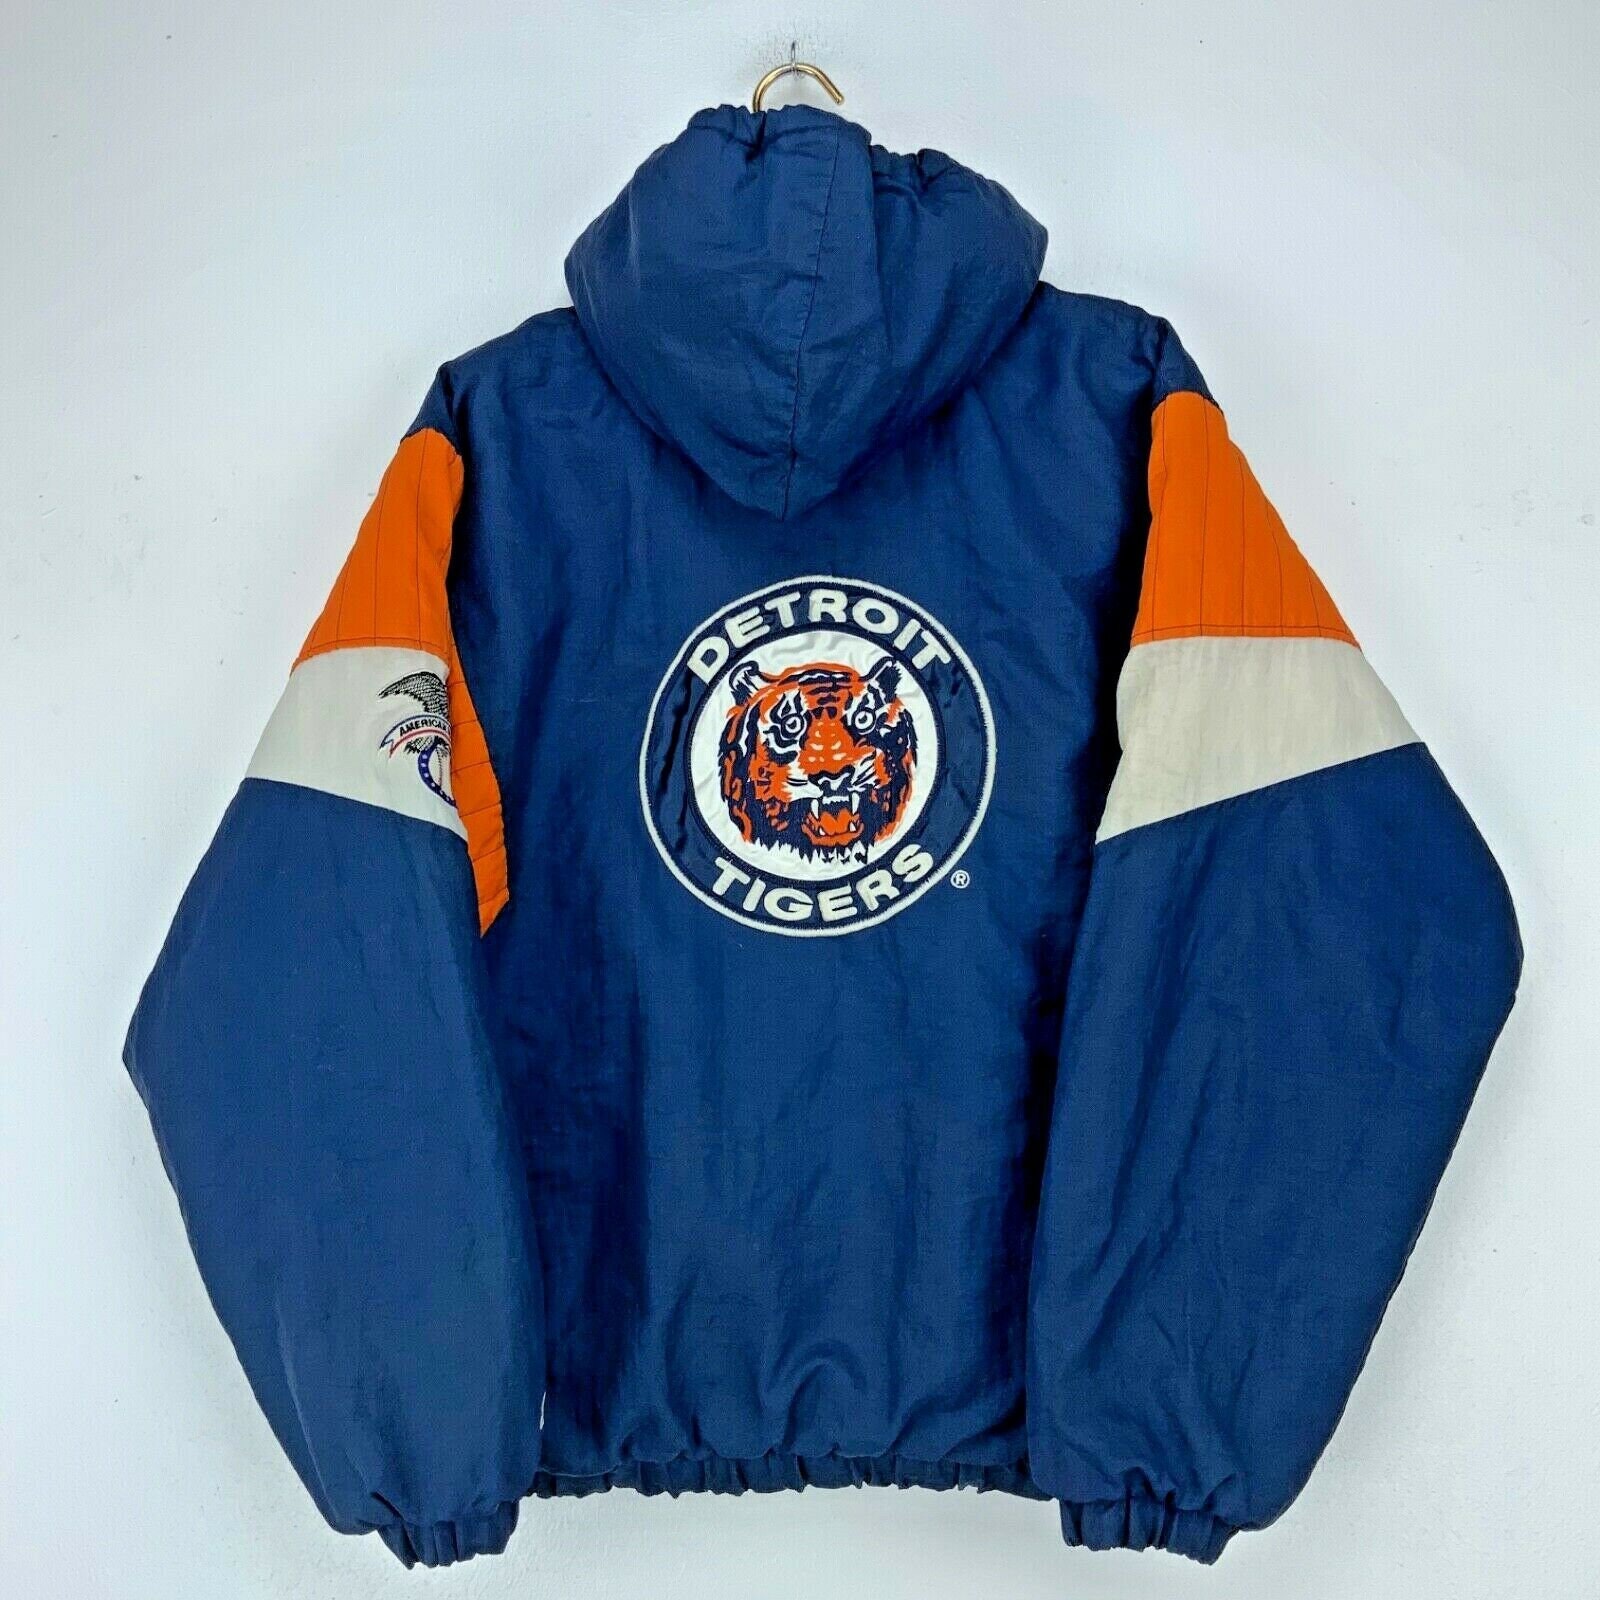 RetroRise1 South Pole Fashion Network Vintage Quarter Zip Jersey Large White Hockey 90s